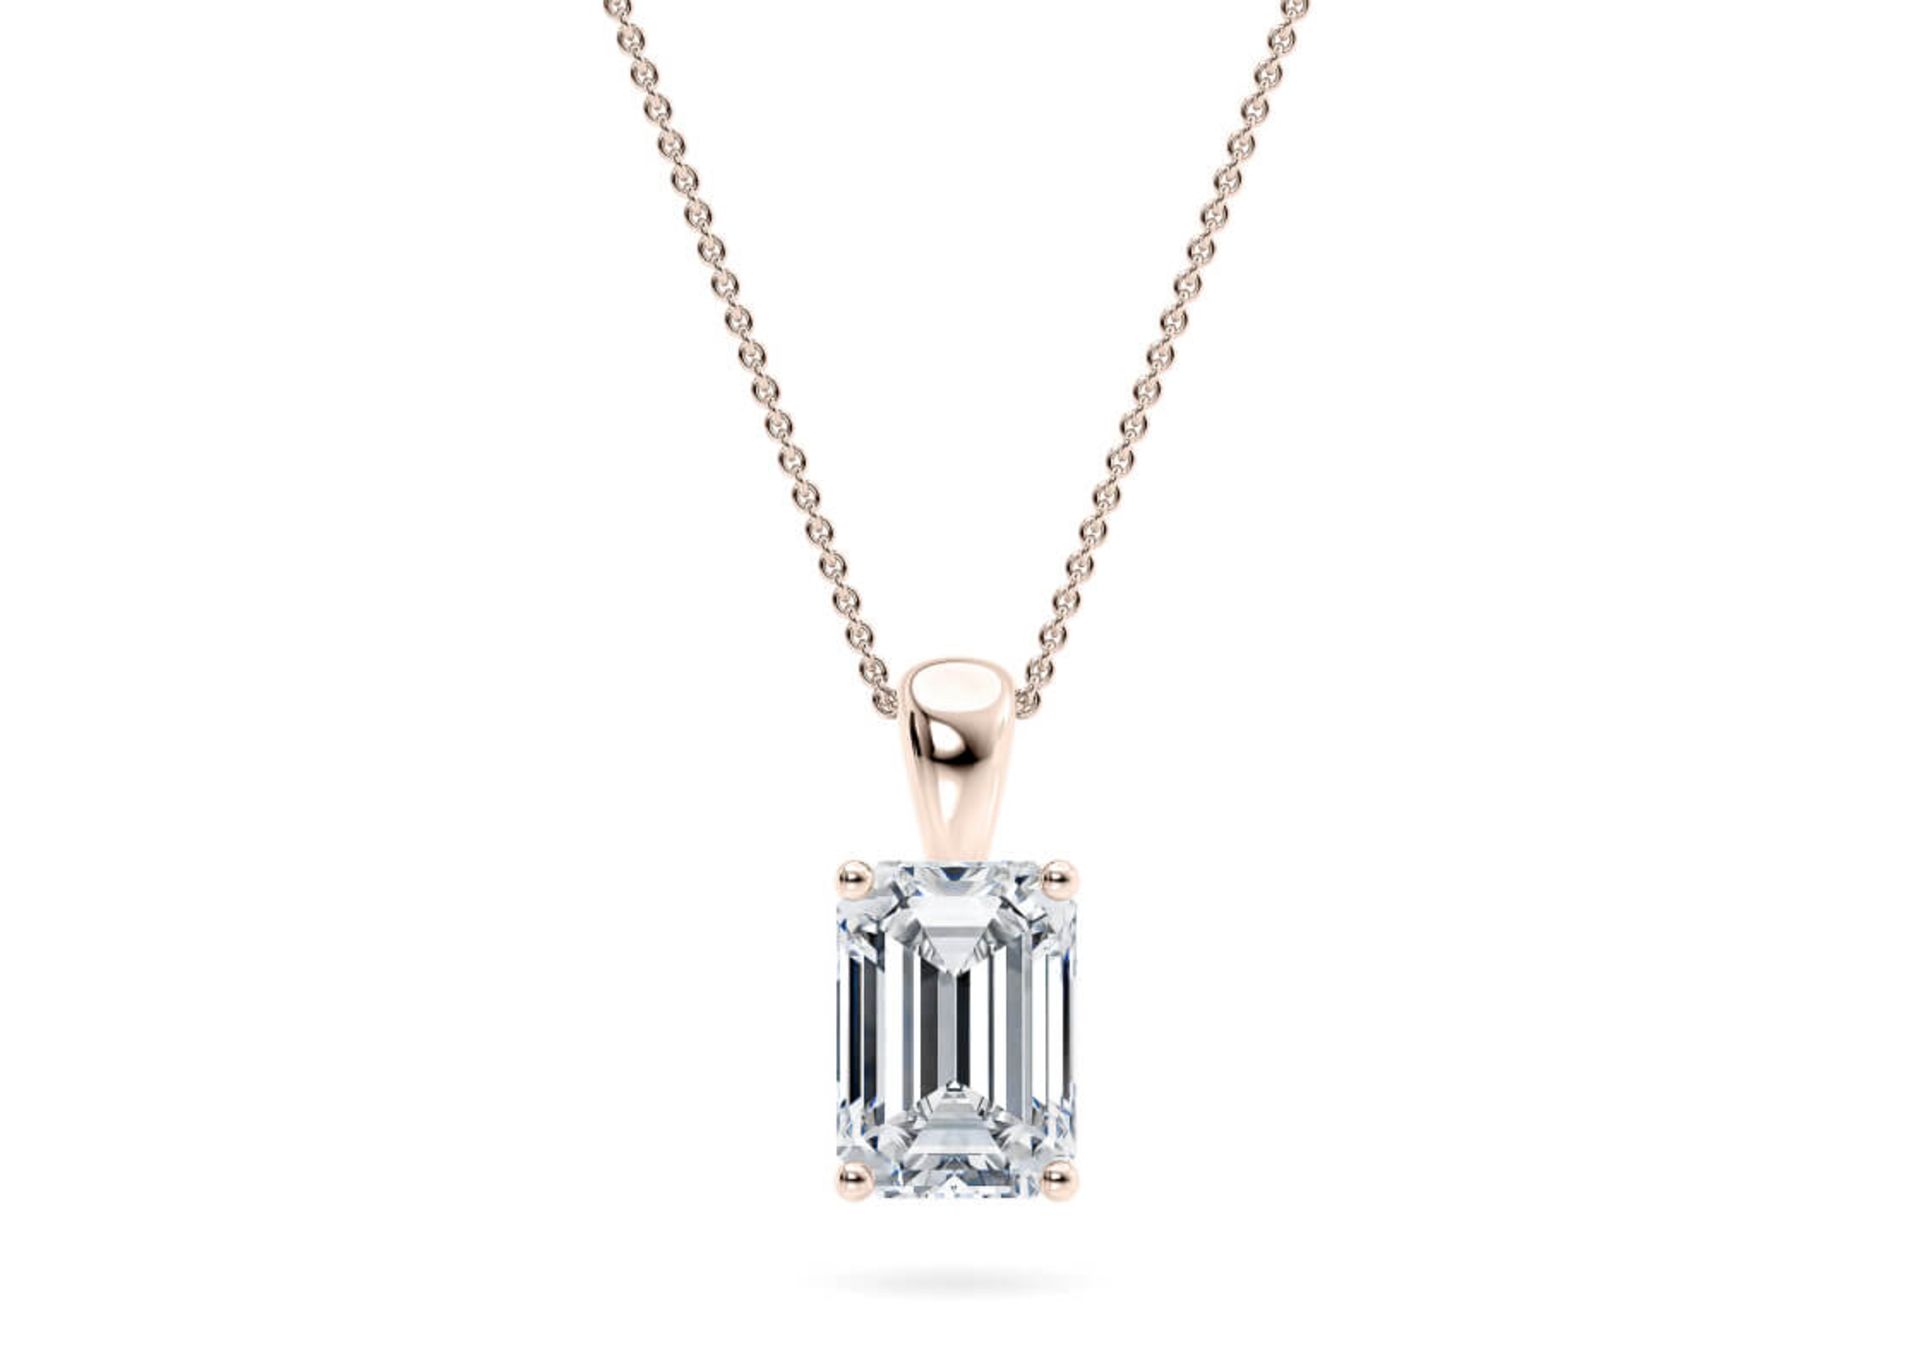 Emerald Cut Diamond 2.00 Carat D Colour VVS2 Clarity - Necklace Pendant - 18kt Rose Gold -IGI